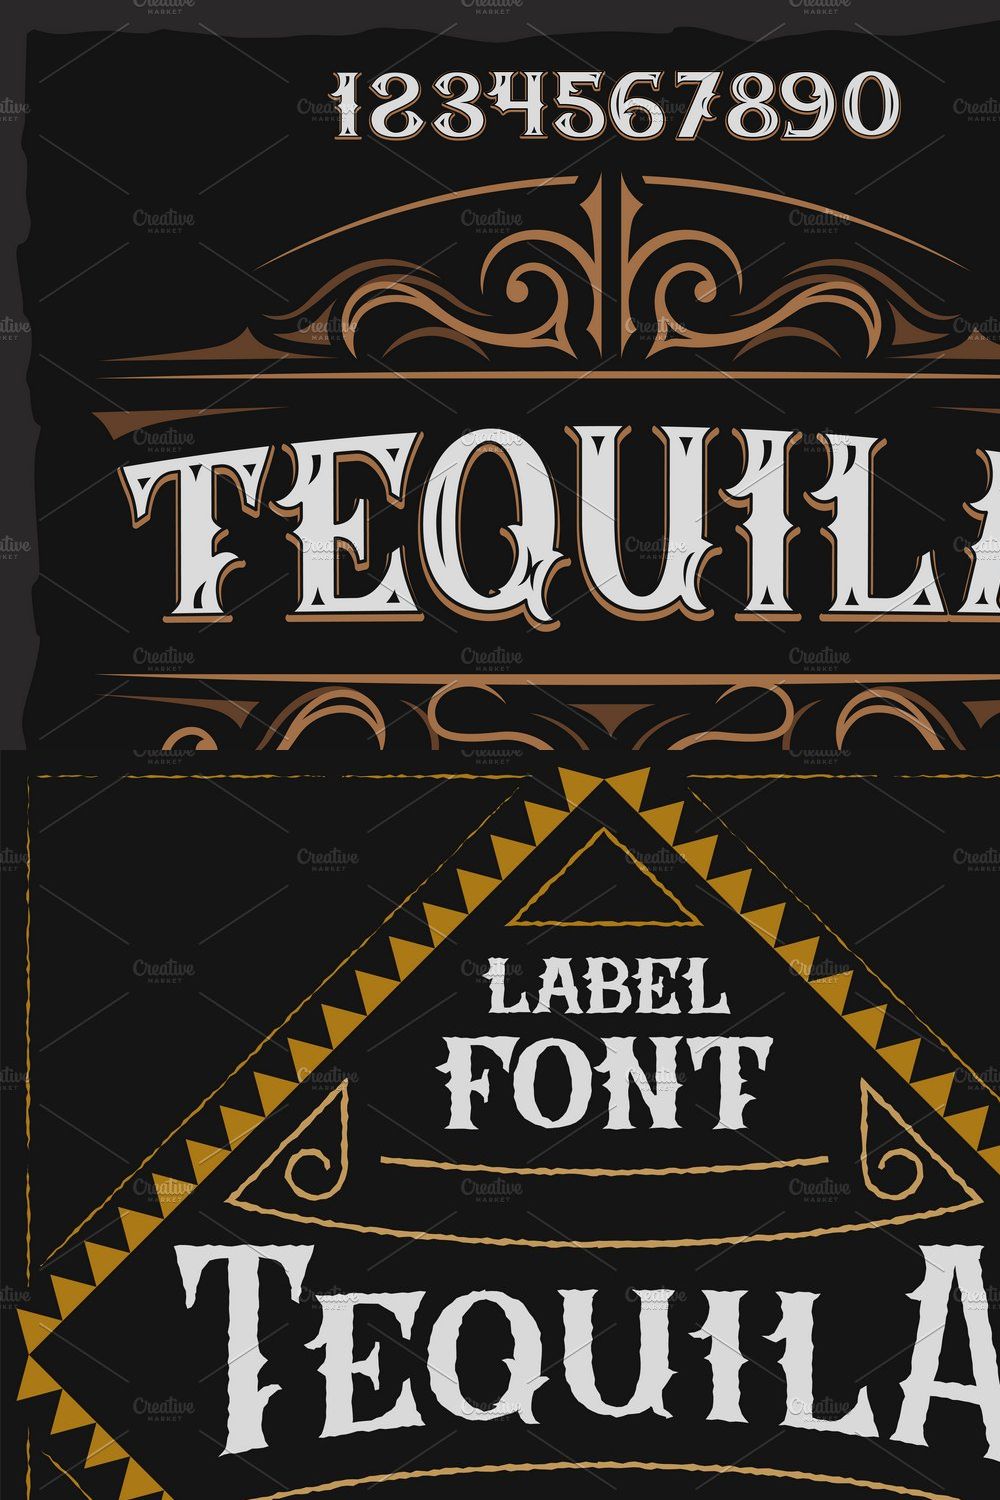 Vintage label typeface Tequila pinterest preview image.